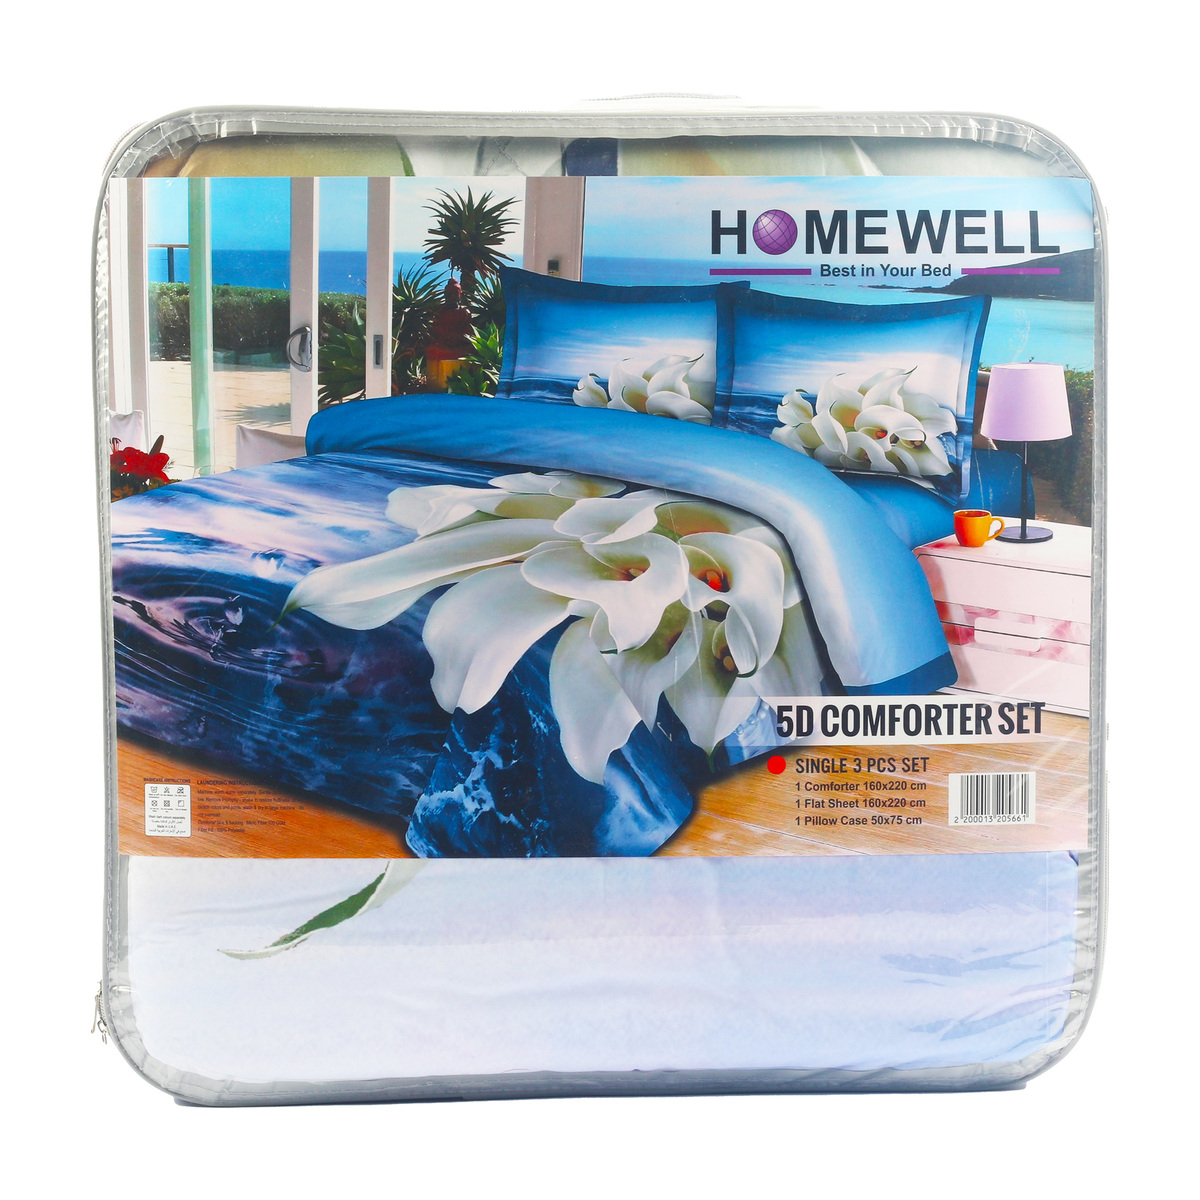 Homewell Comforter Set 160 x 220cm 3pcs Set Assorted